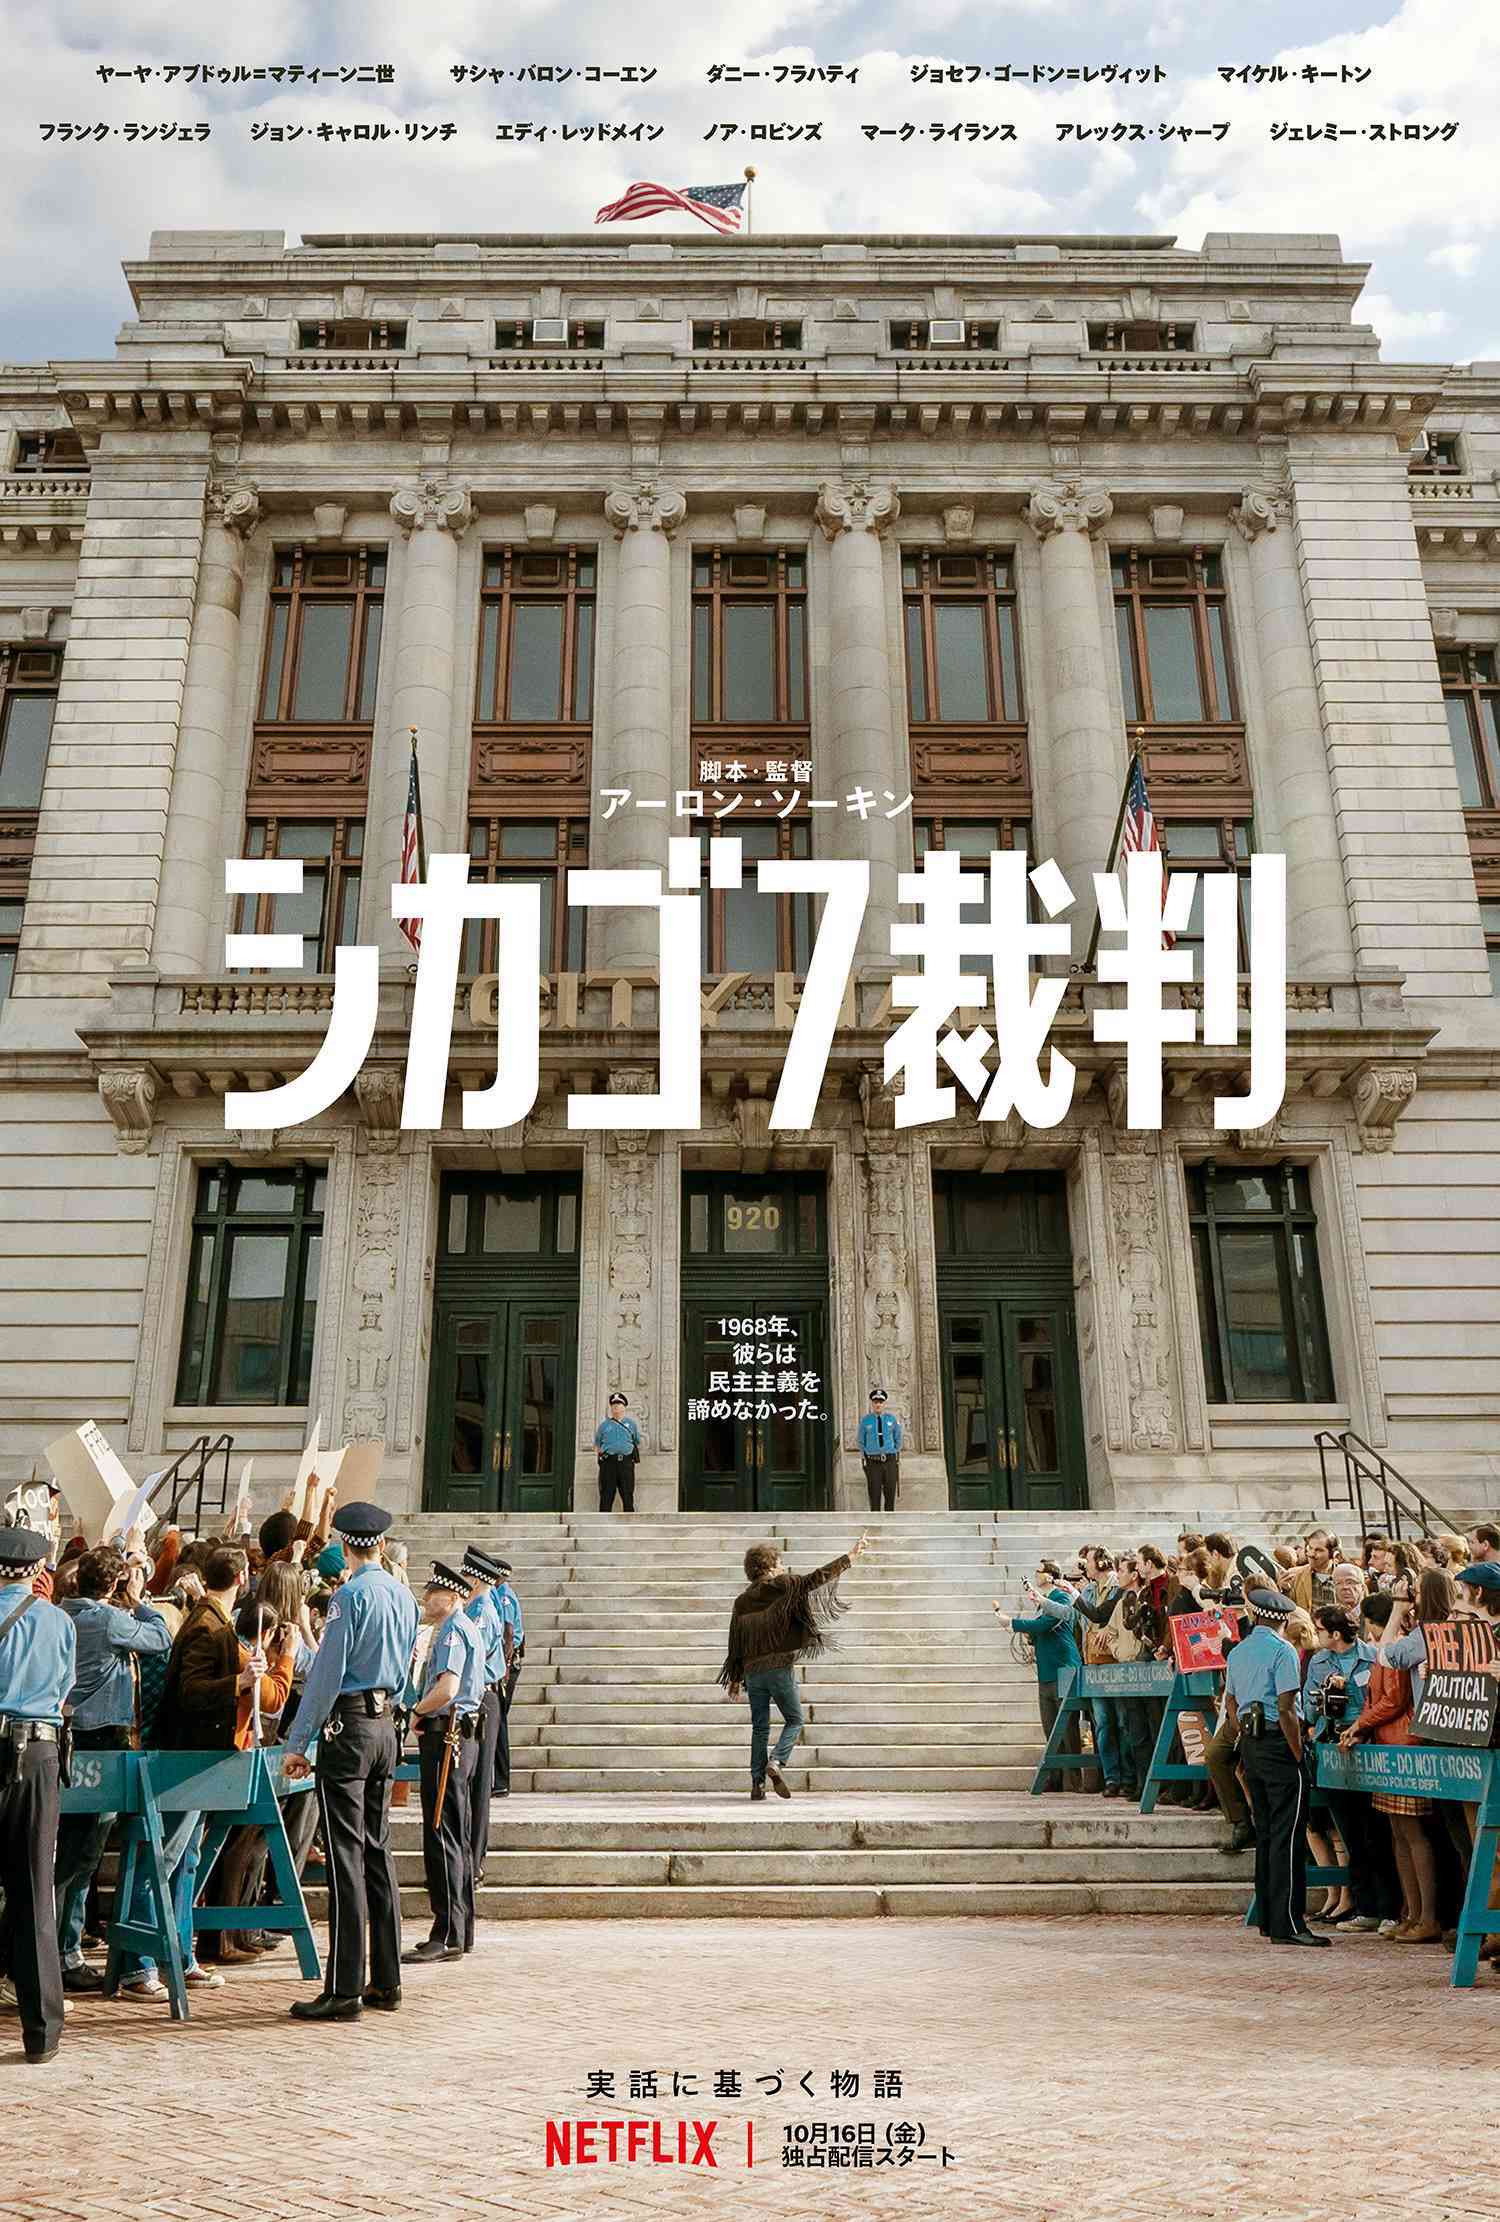  Netflix映画『シカゴ７裁判』は10月16日(金)より独占配信開始。